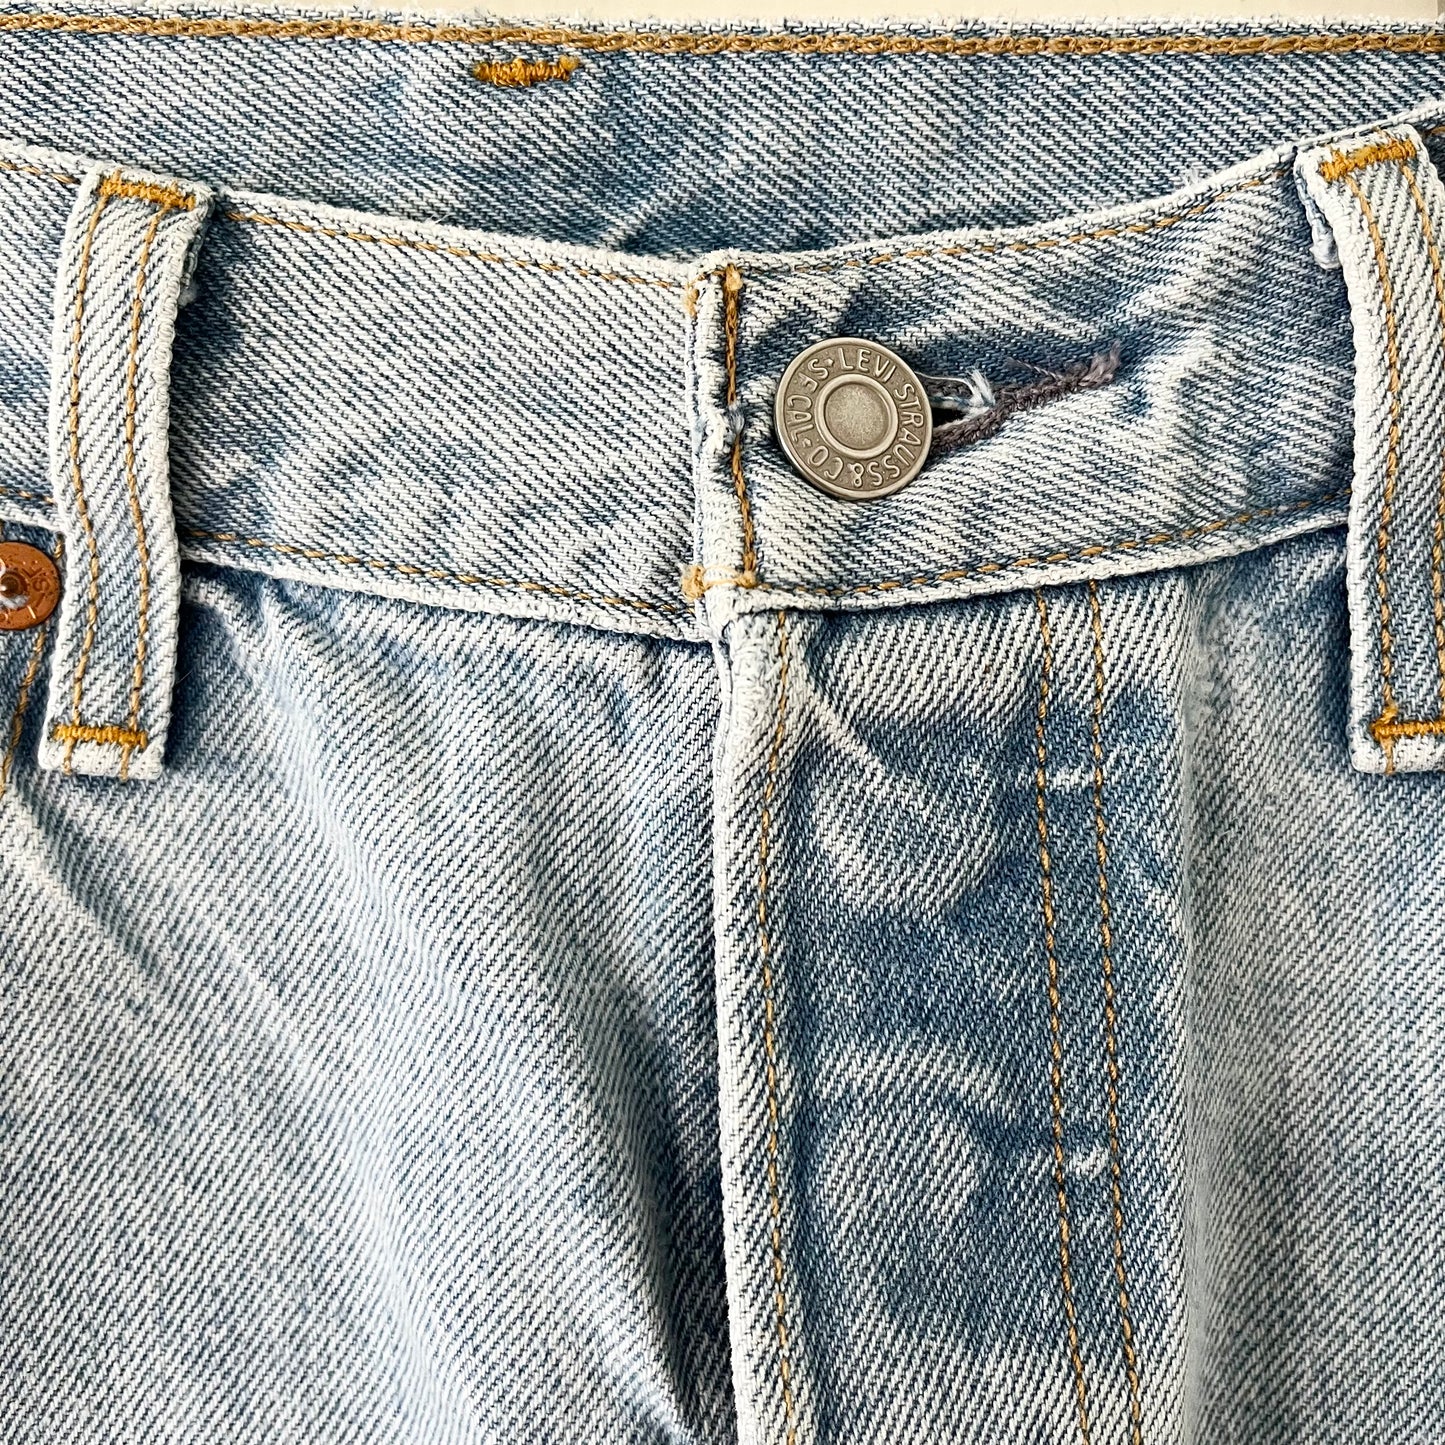 Levi's Distressed Jeans (15" across waist)